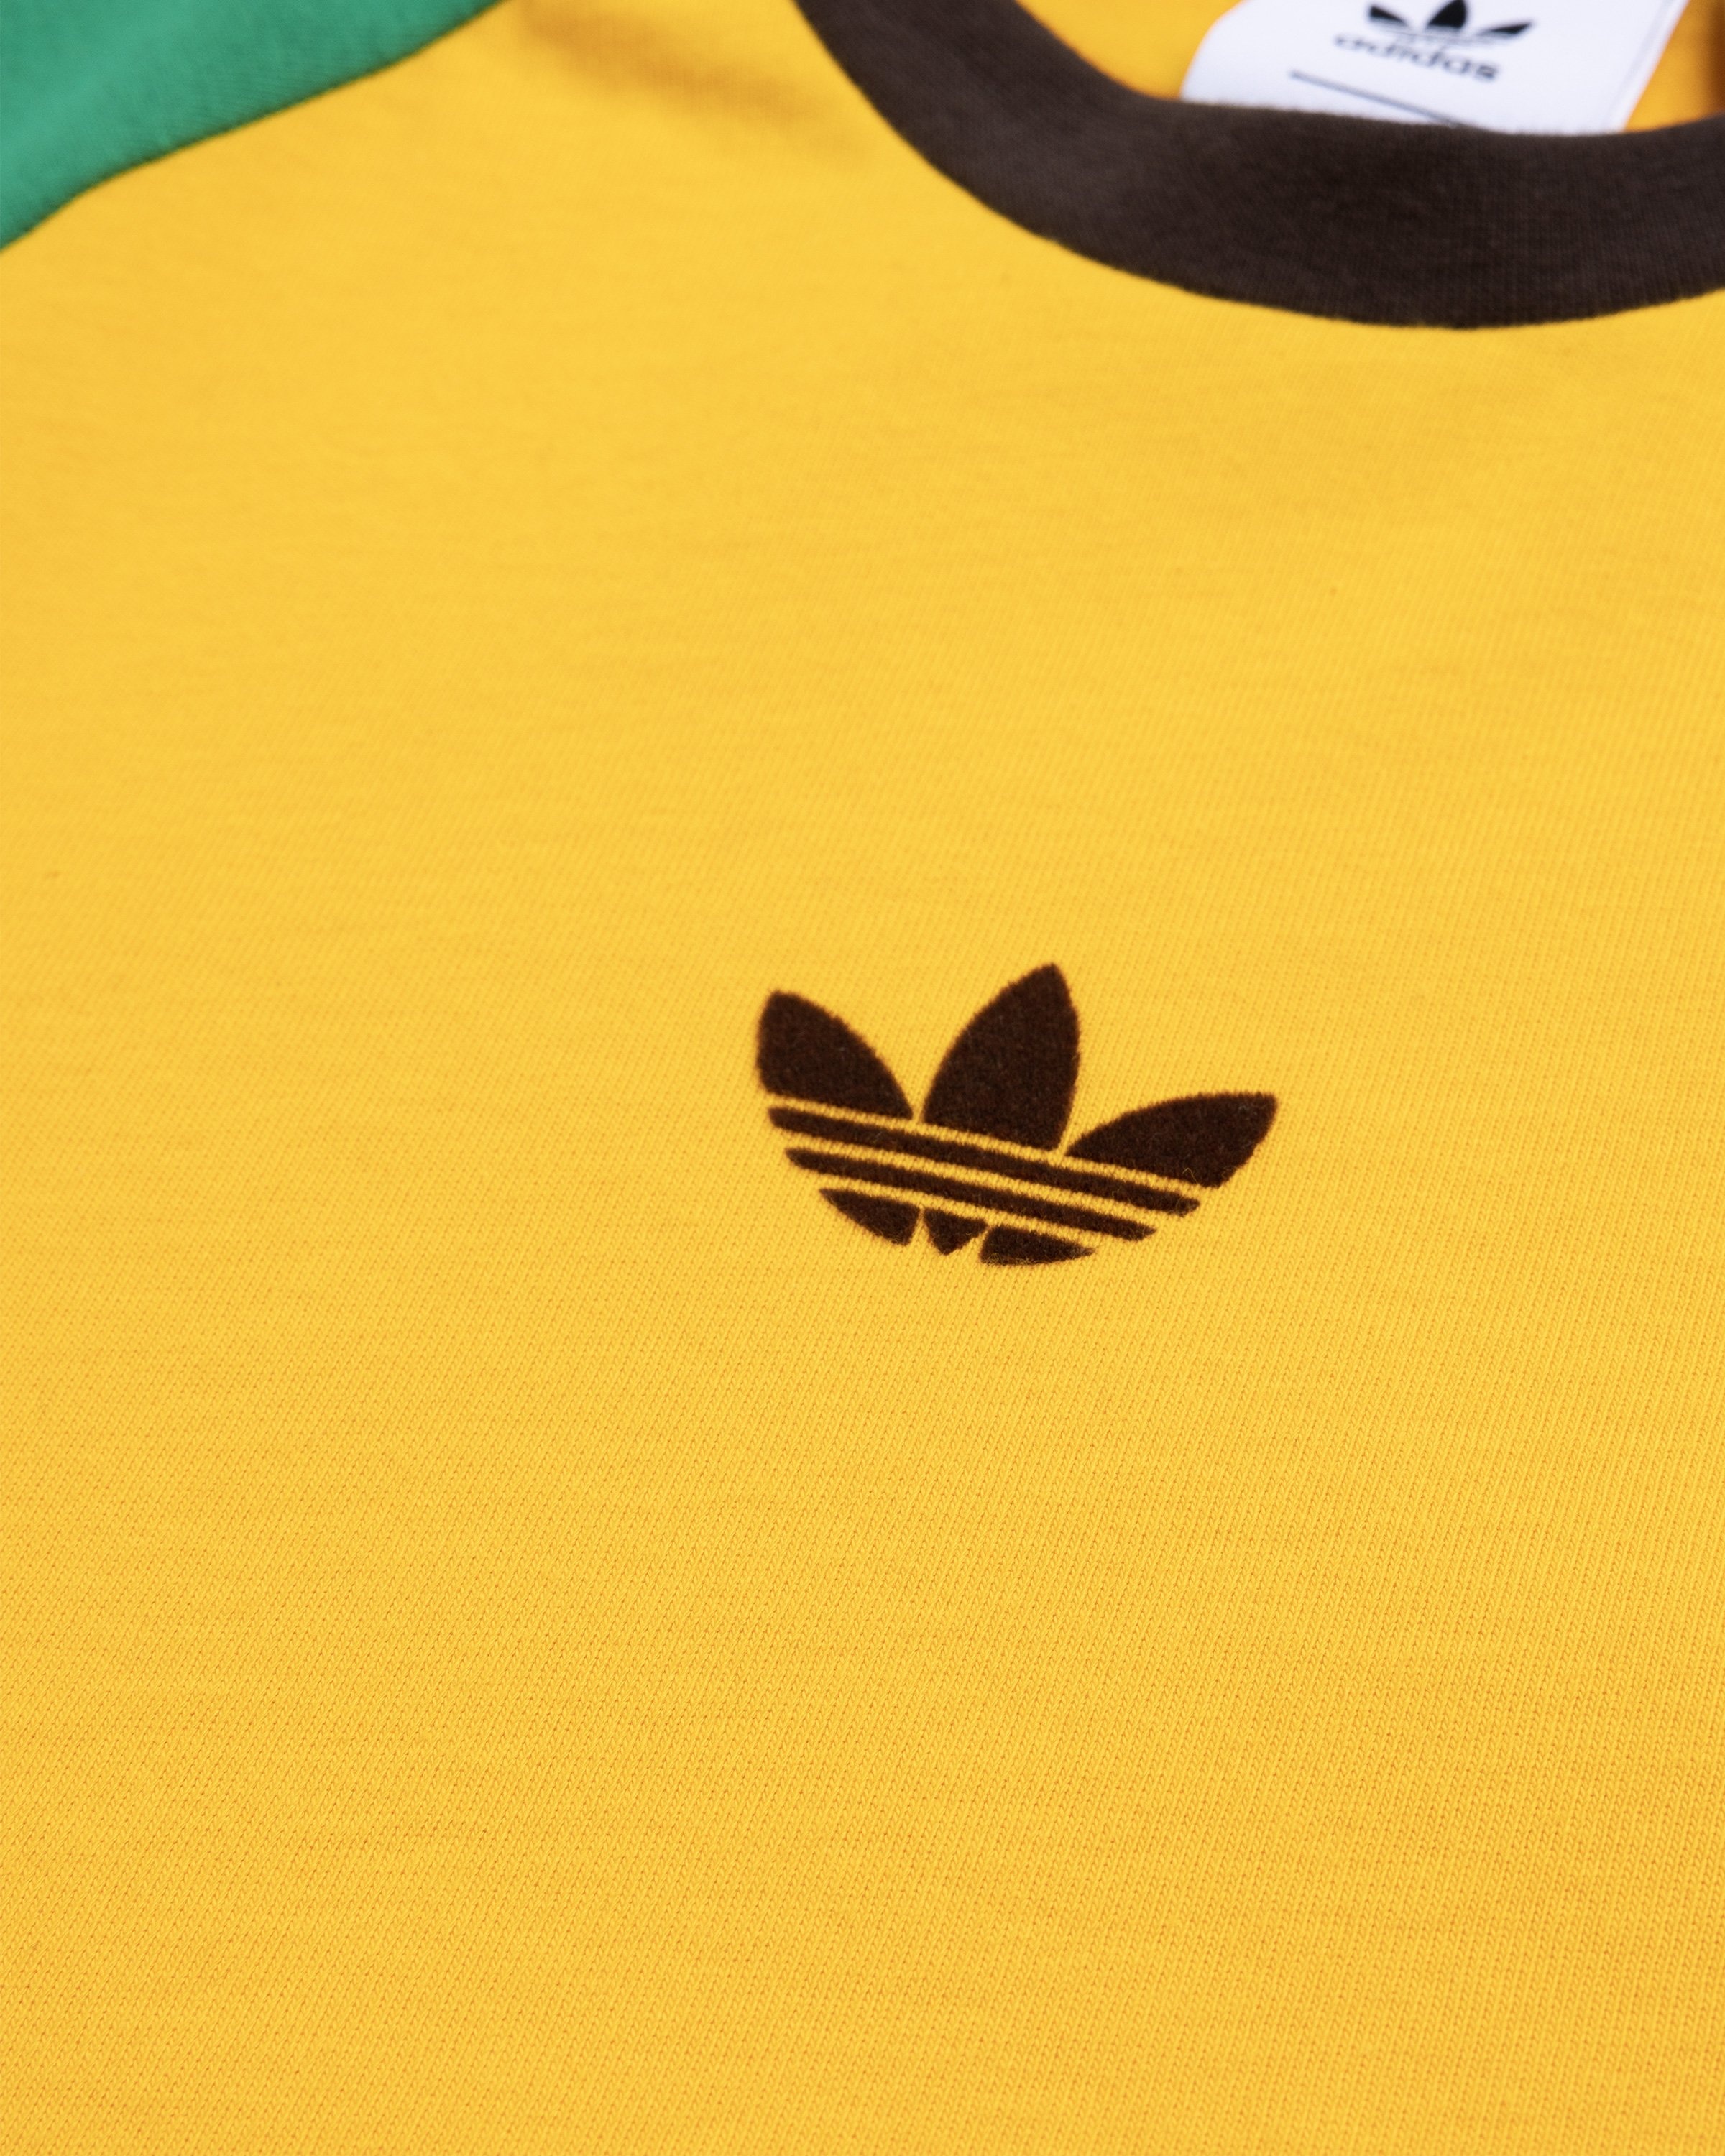 Adidas x Wales Bonner – Organic Cotton Tee Collegiate Gold - T-shirts - Yellow - Image 6